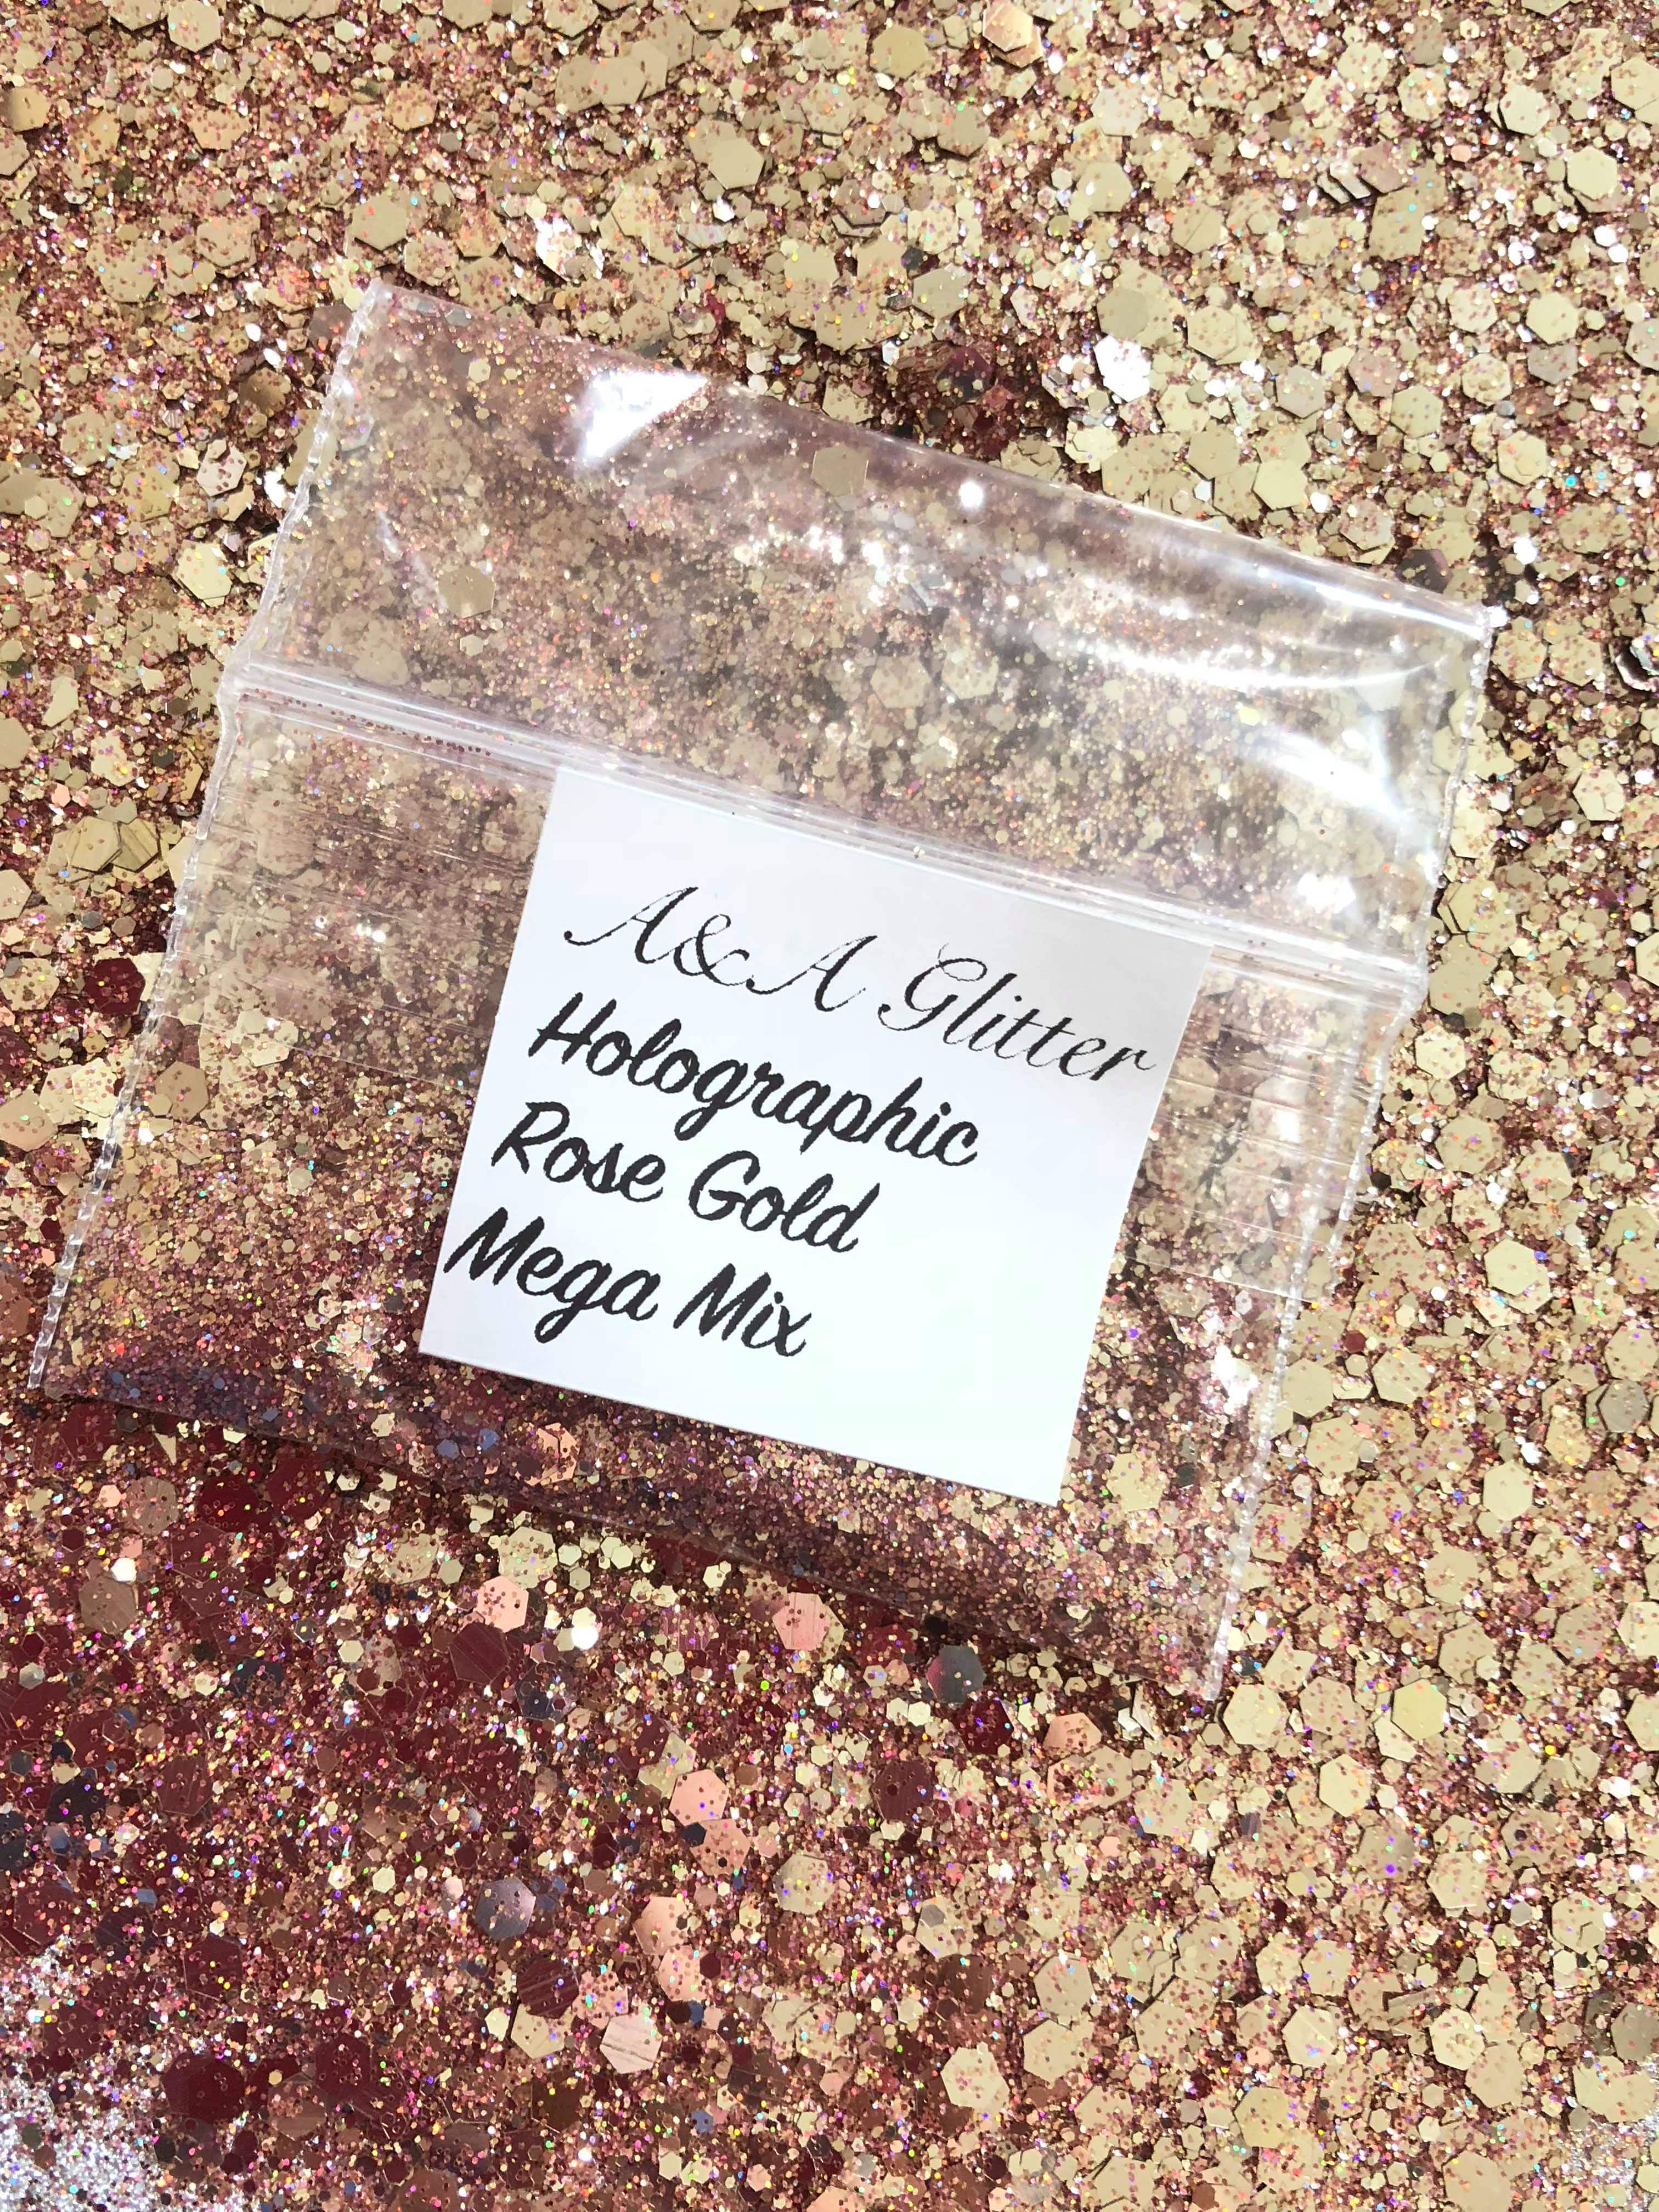 Holographic Rose Gold Mega Mix - A&A Glitter